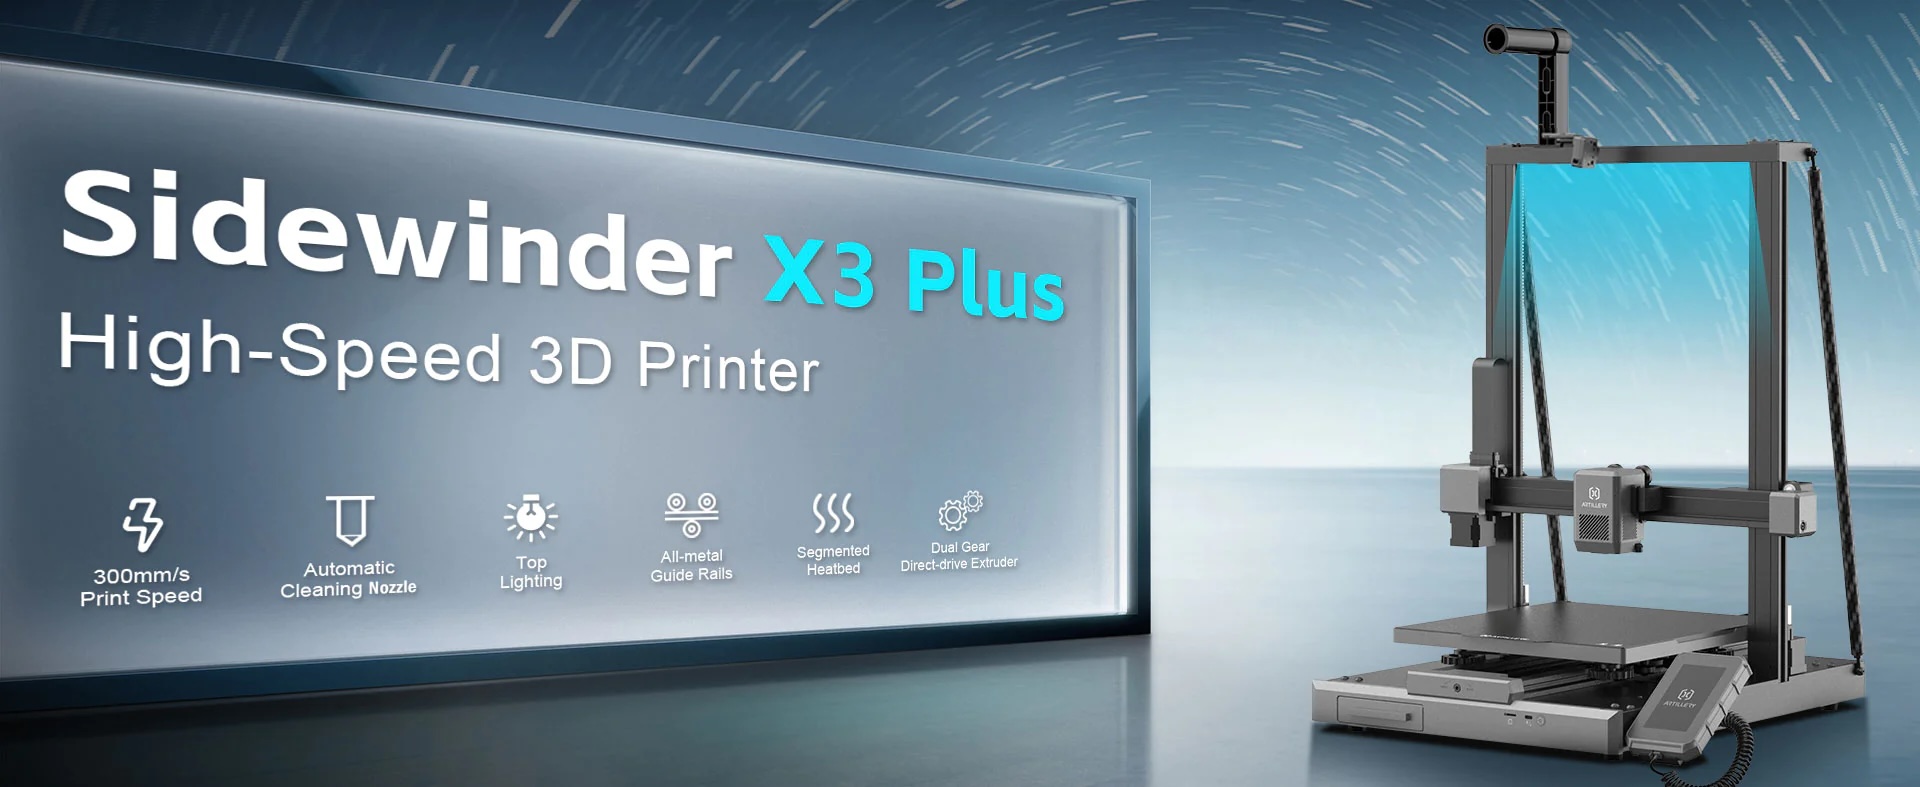 Sidewinder X3 Plus